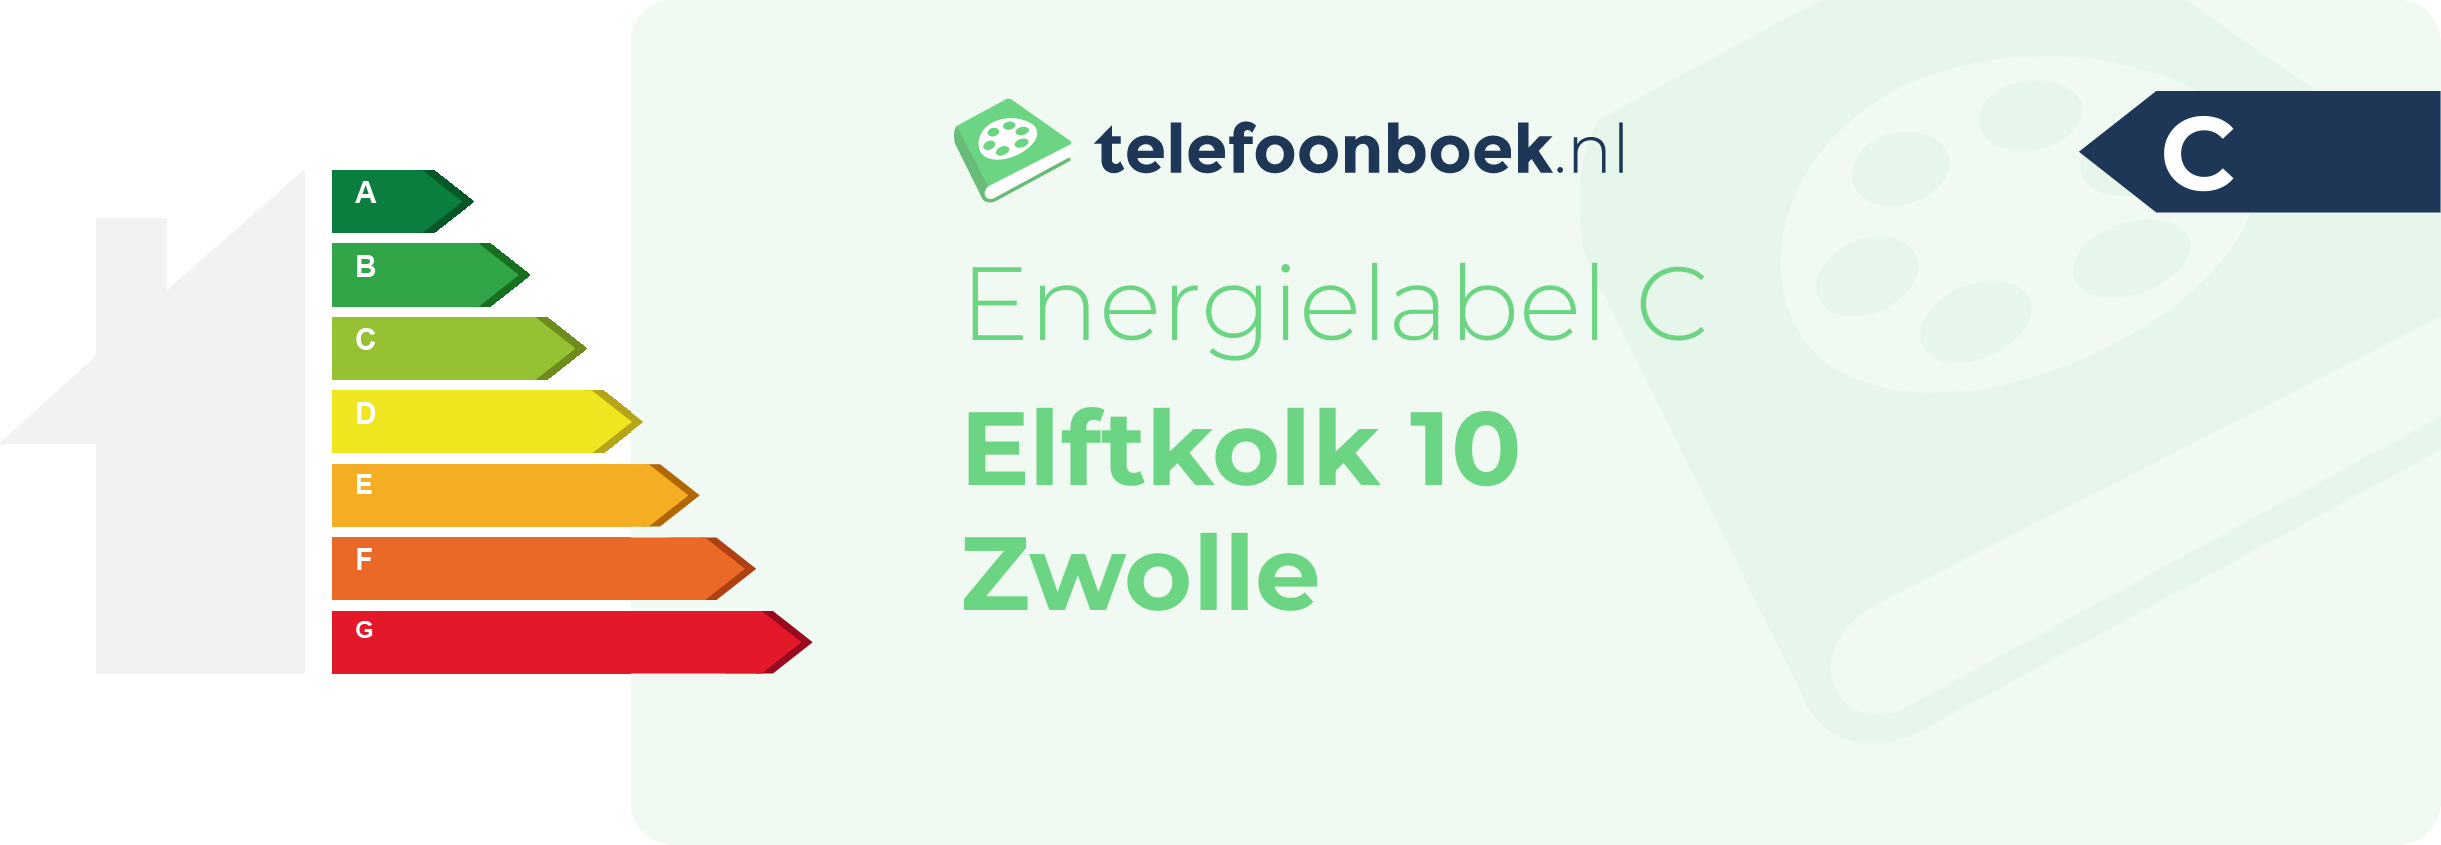 Energielabel Elftkolk 10 Zwolle